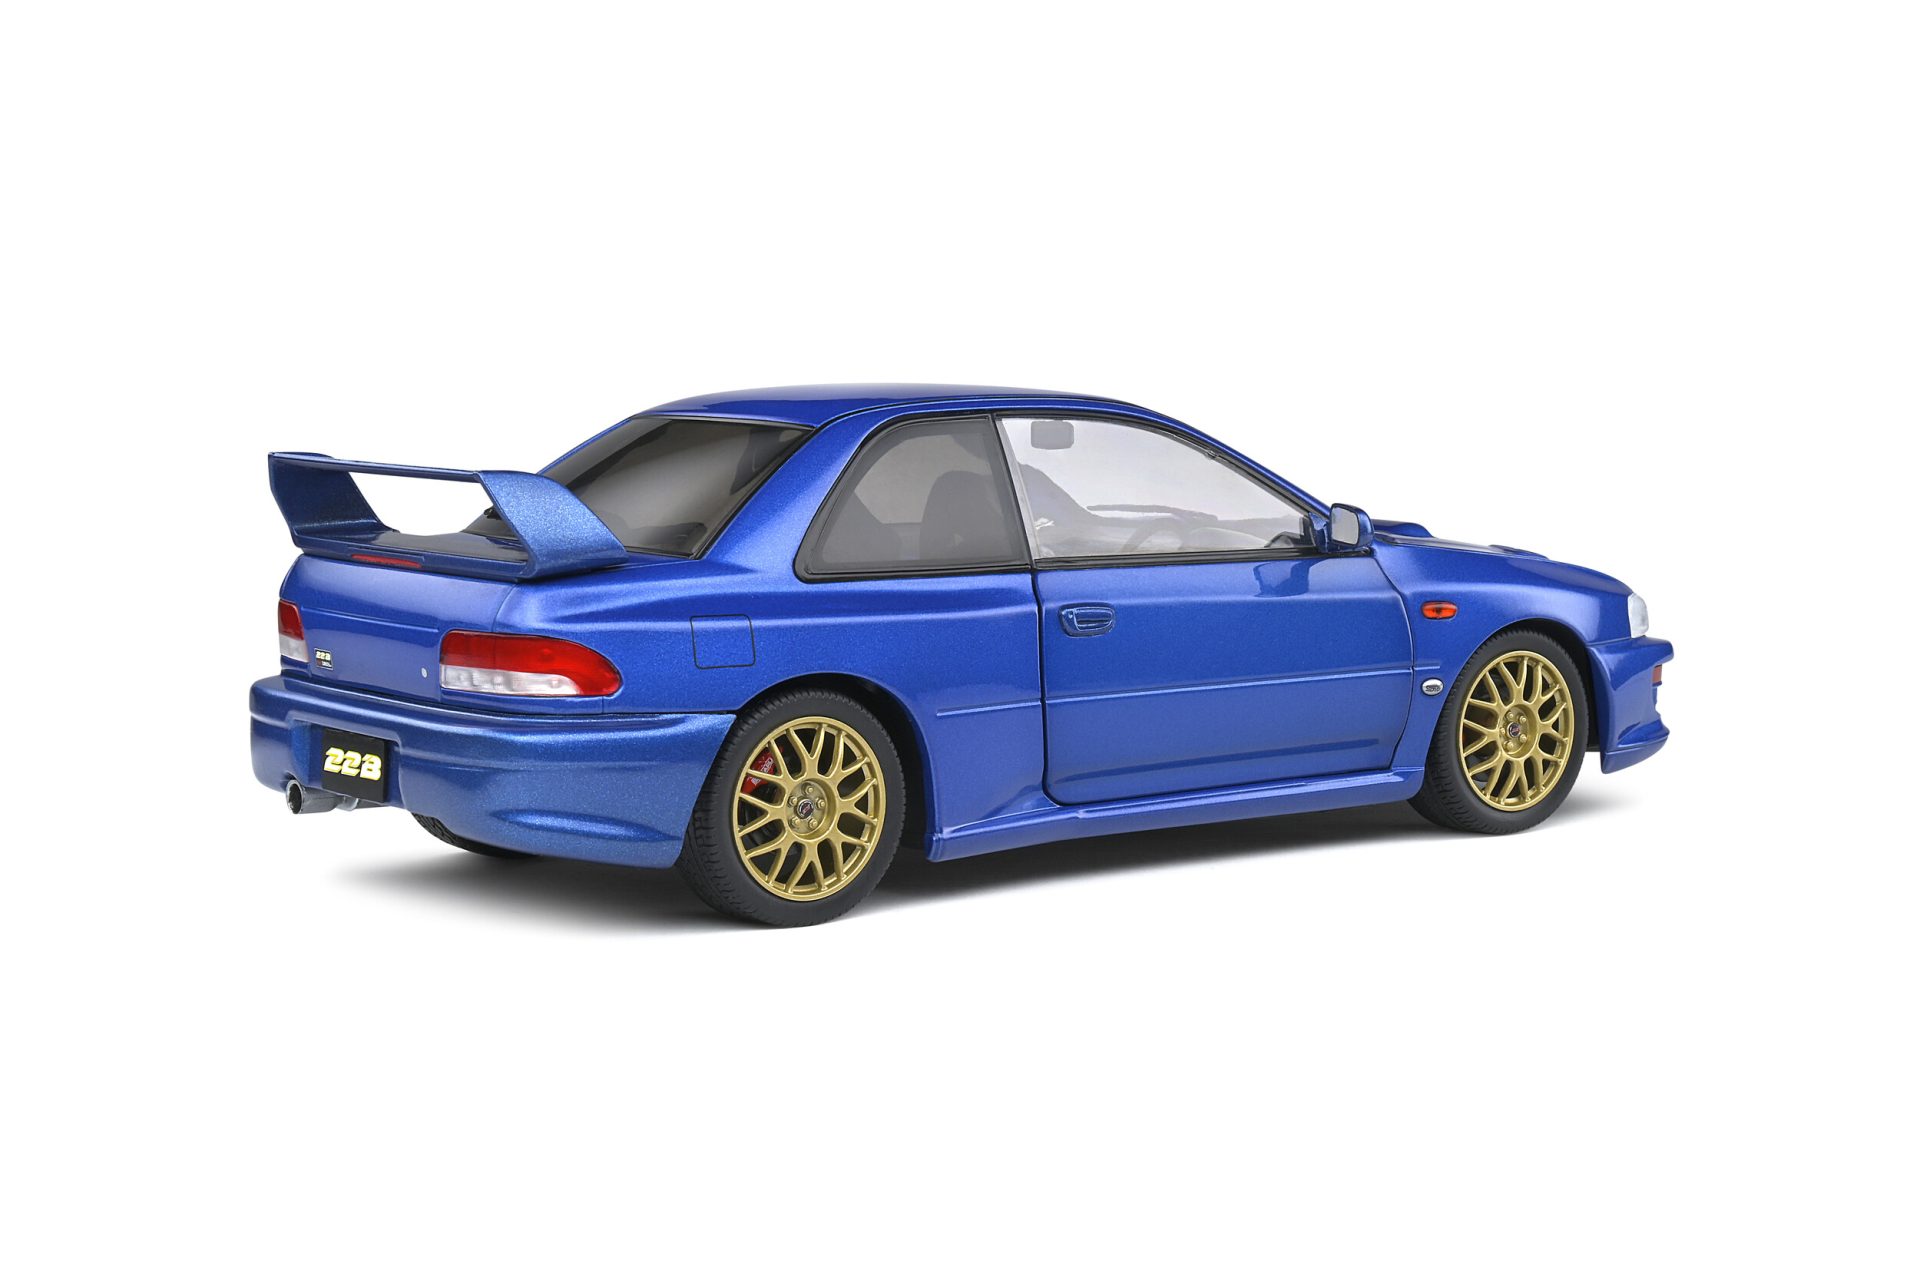 1:18 Subaru Impreza WRX STI - 22b - 1998 - Metallic blue 